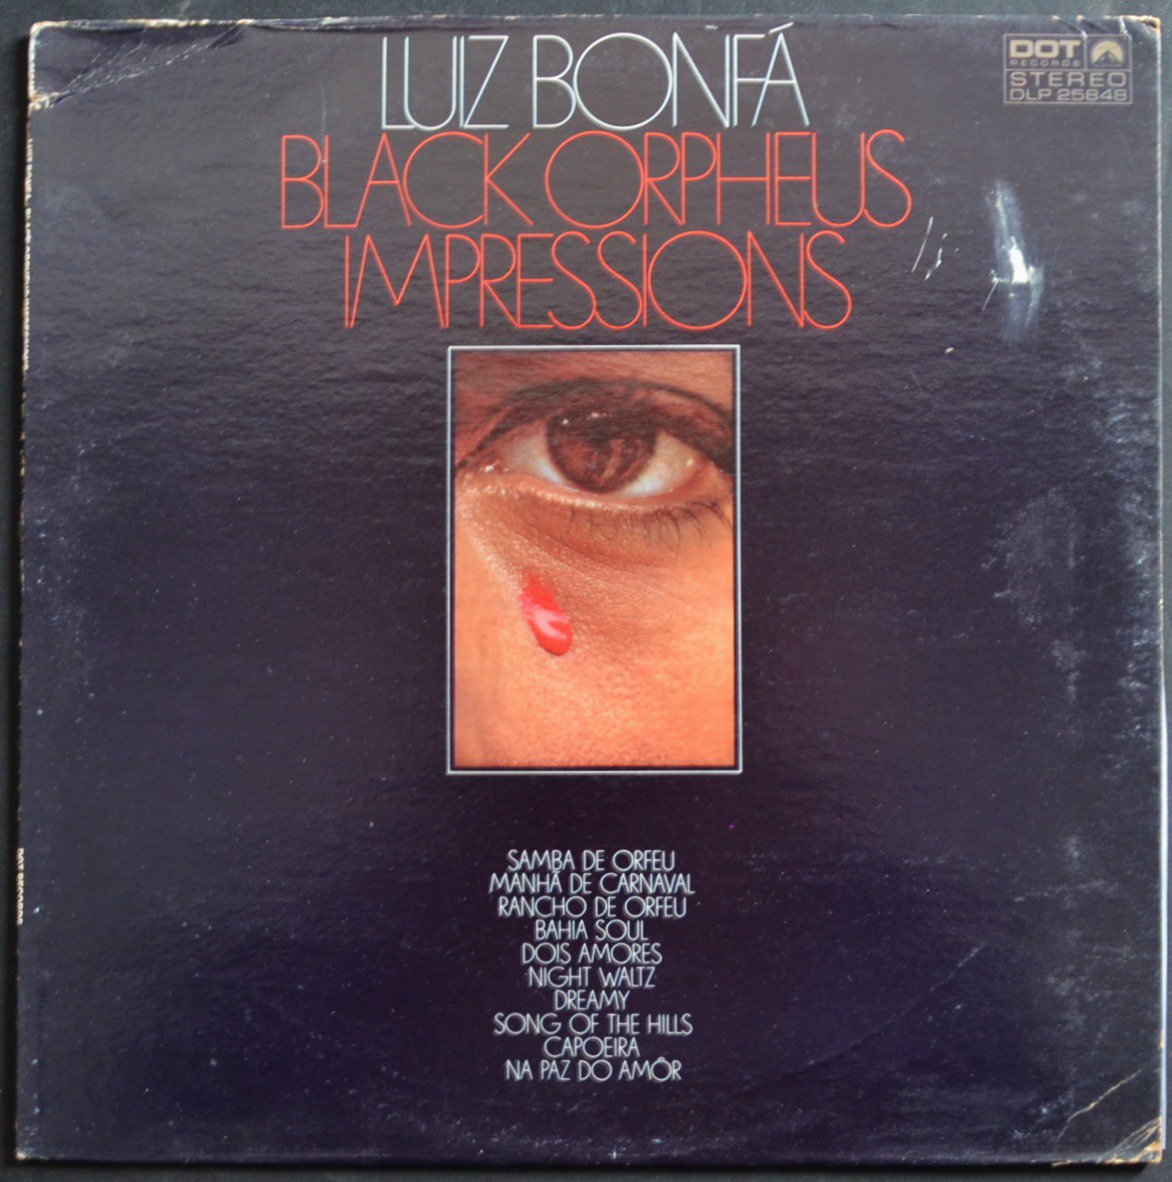 LUIZ BONFÁ (LUIZ BONFA) / BLACK ORPHEUS IMPRESSIONS (LP)